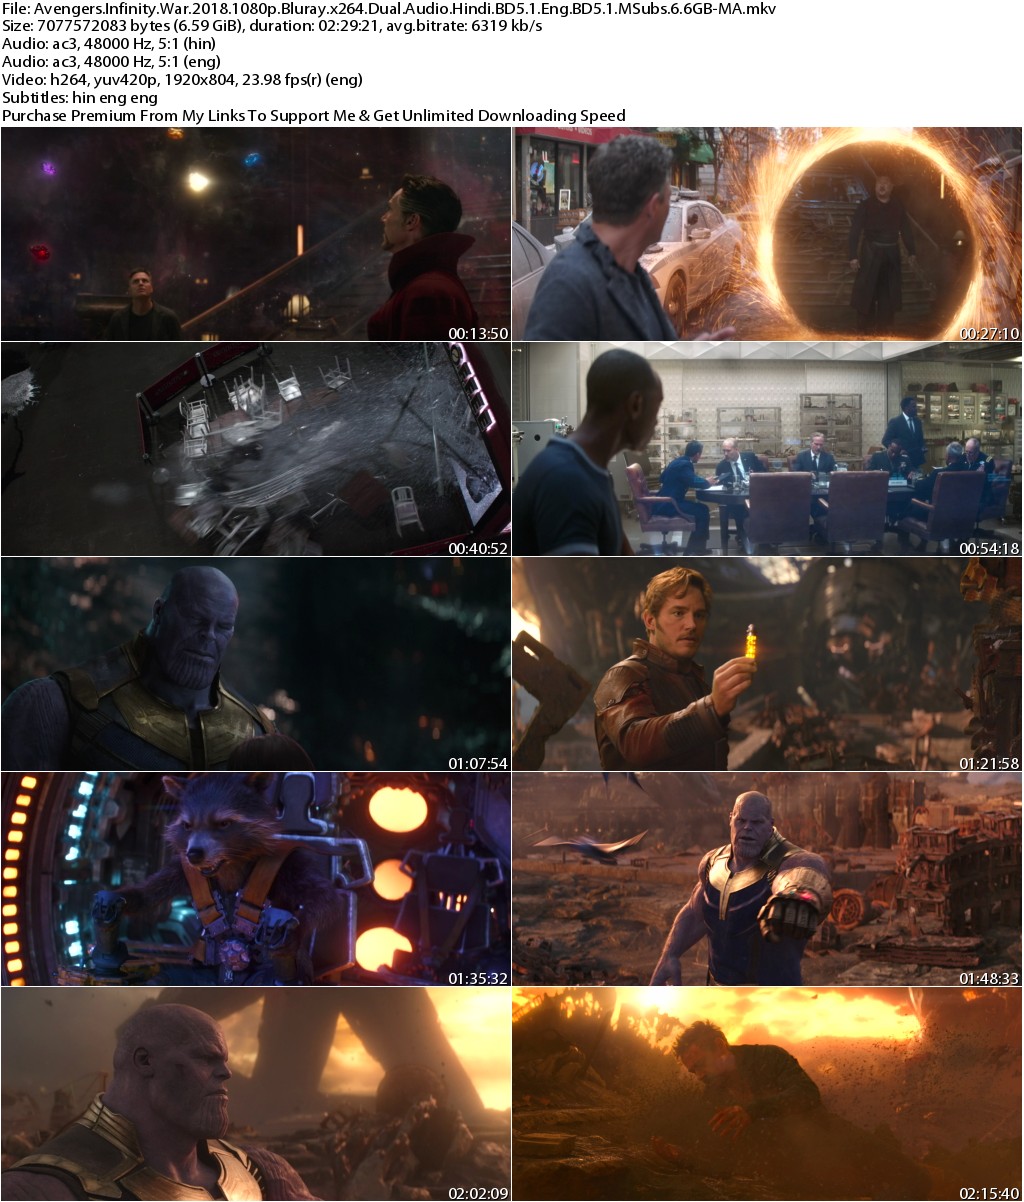 Avengers Infinity War (2018) 1080p Bluray x264 Dual Audio Hindi BD5.1 Eng BD5.1 MSubs 6.6GB-MA